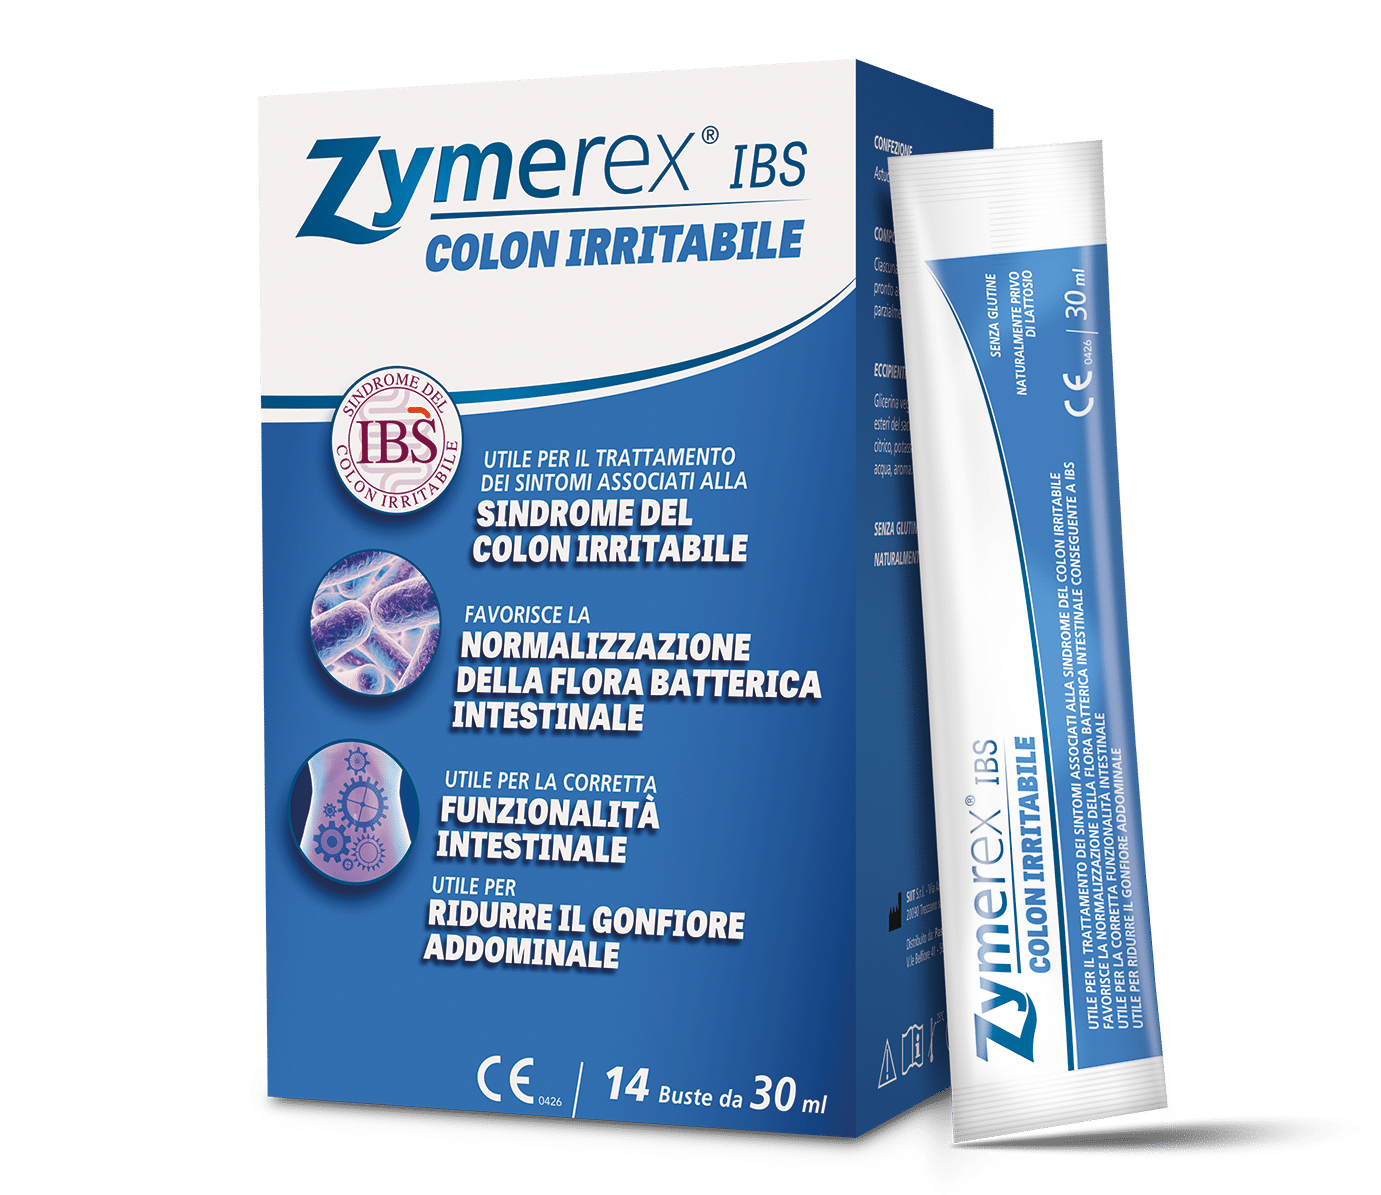 Zymerex® IBS Colon Irritabile